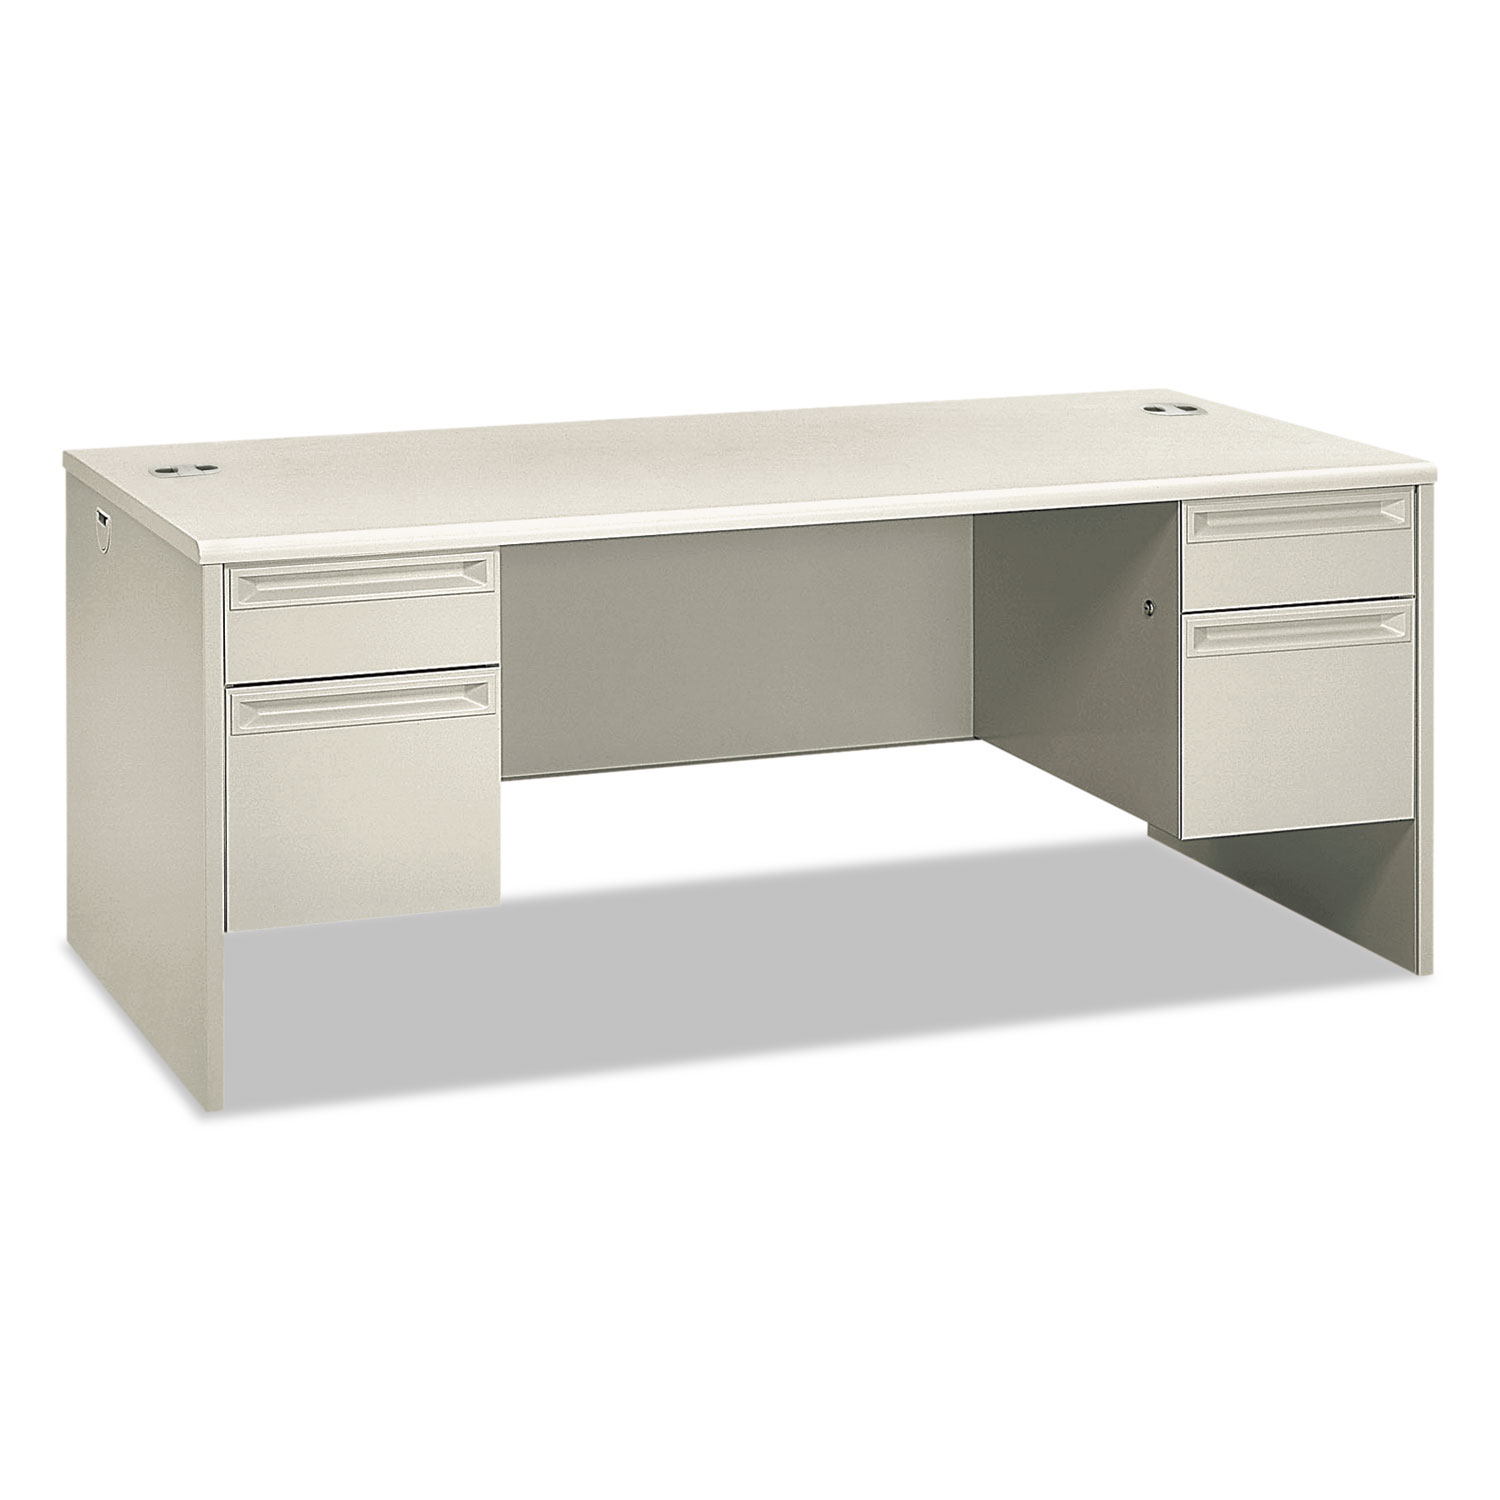  HON H38180.B9.Q 38000 Series Double Pedestal Desk, 72w x 36d x 30h, Silver Mesh/Light Gray (HON38180B9Q) 